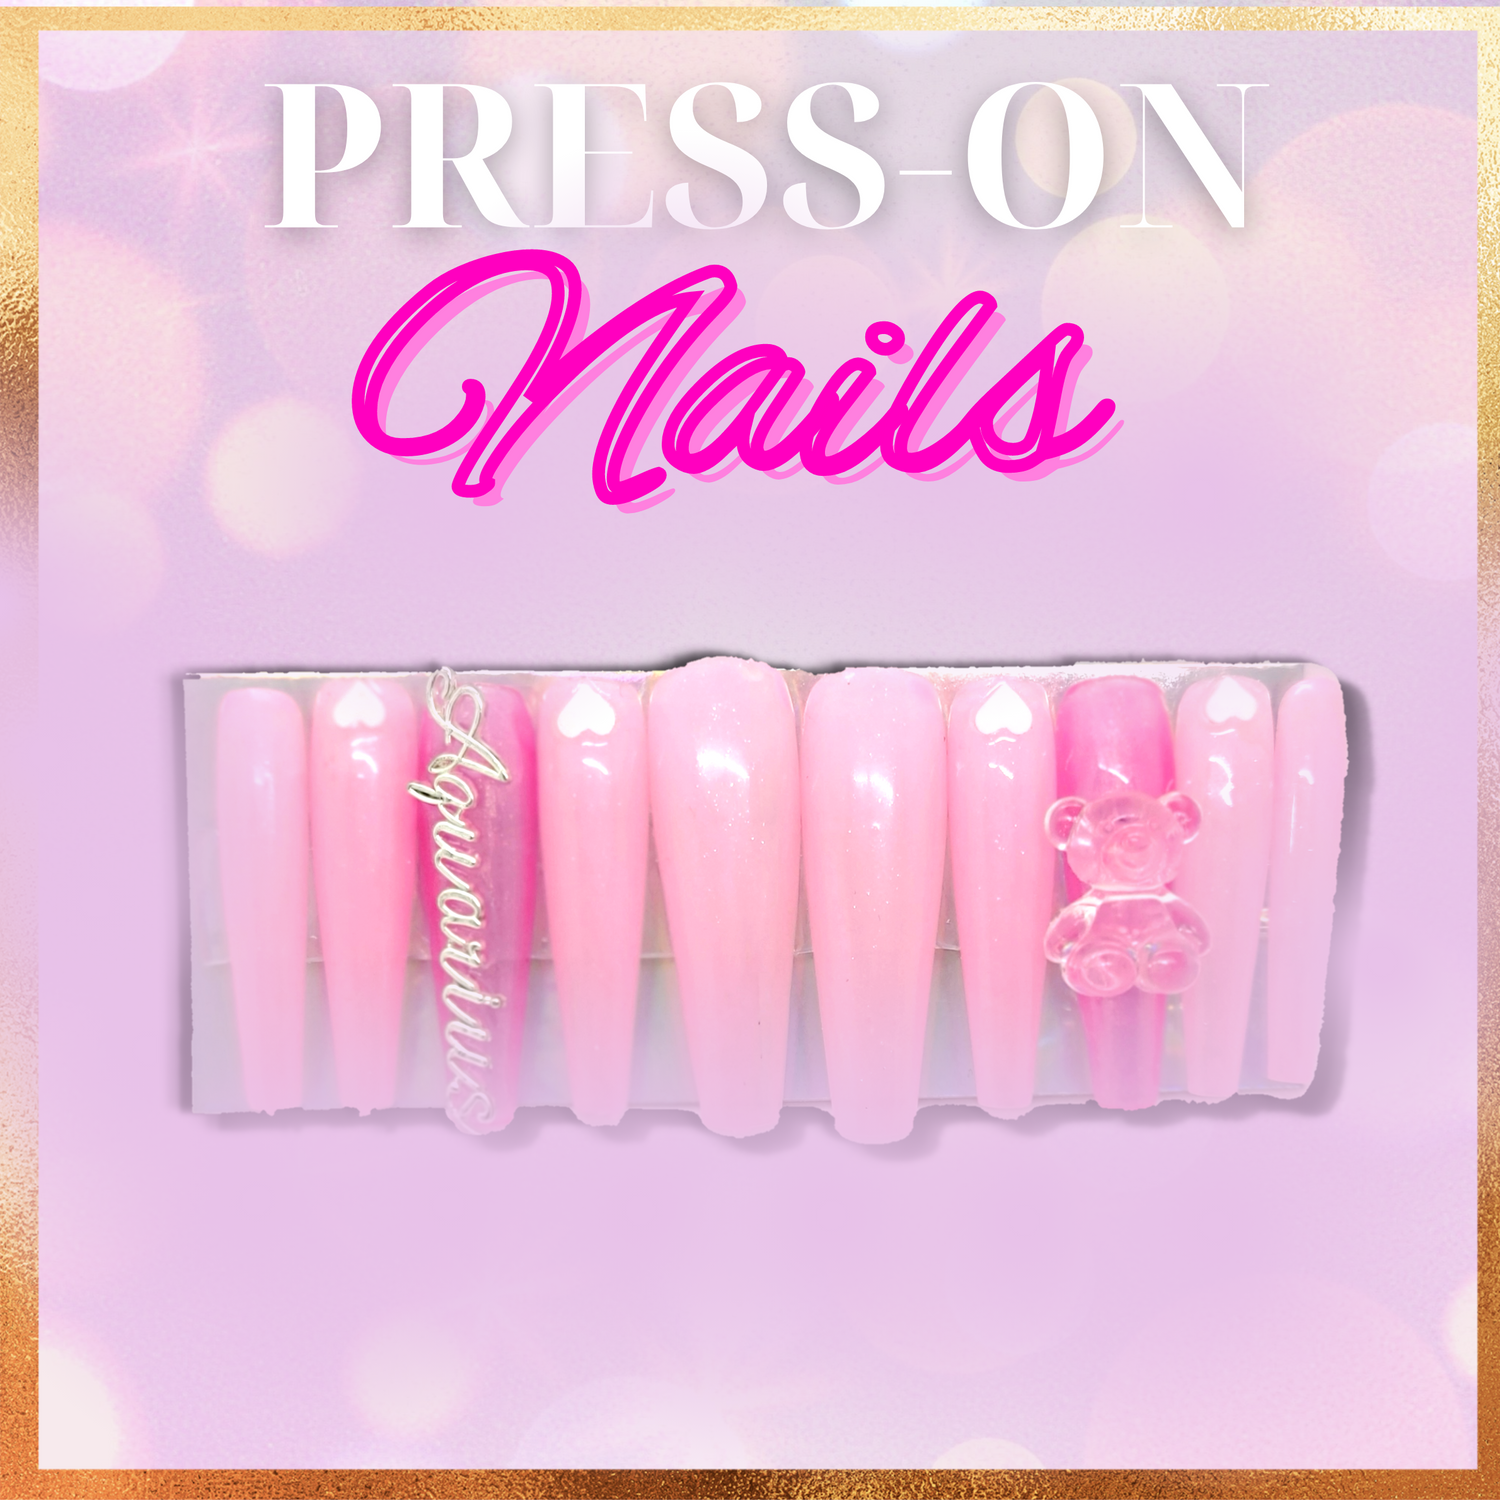 Press-On Nails